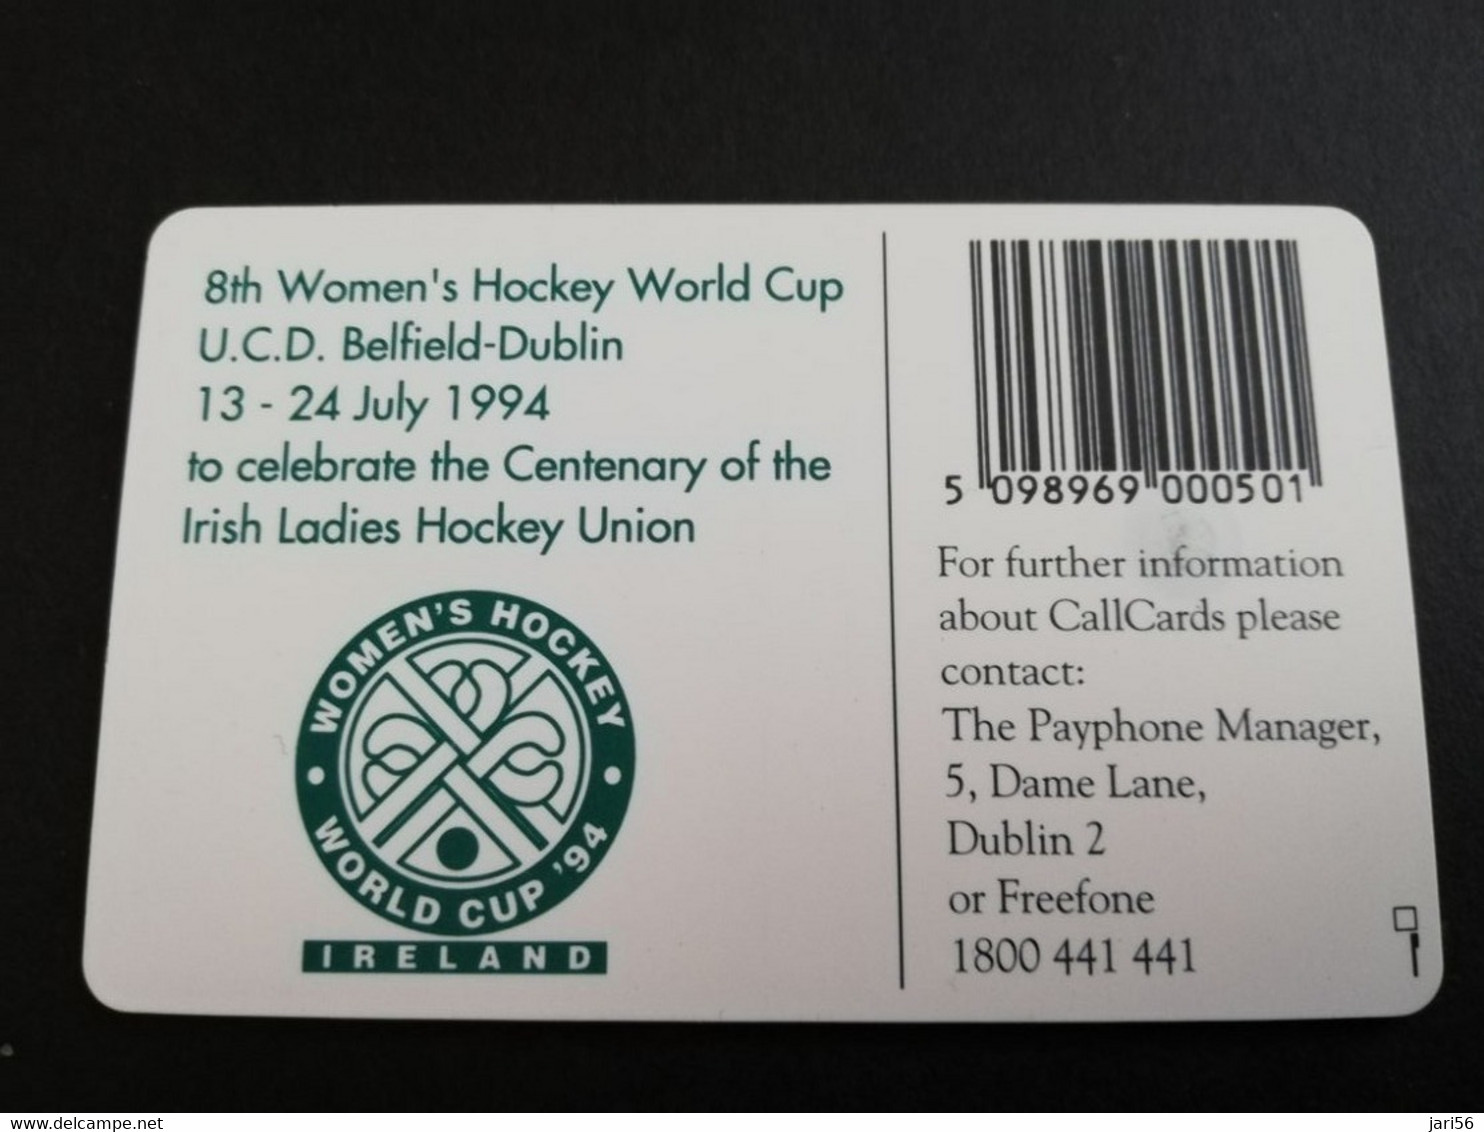 IRELAND /IERLANDE   CHIPCARD  50  UNITS  8TH WOMENS HOCKEY WORLD CUP IRELAND           CHIP   ** 5267** - Irland